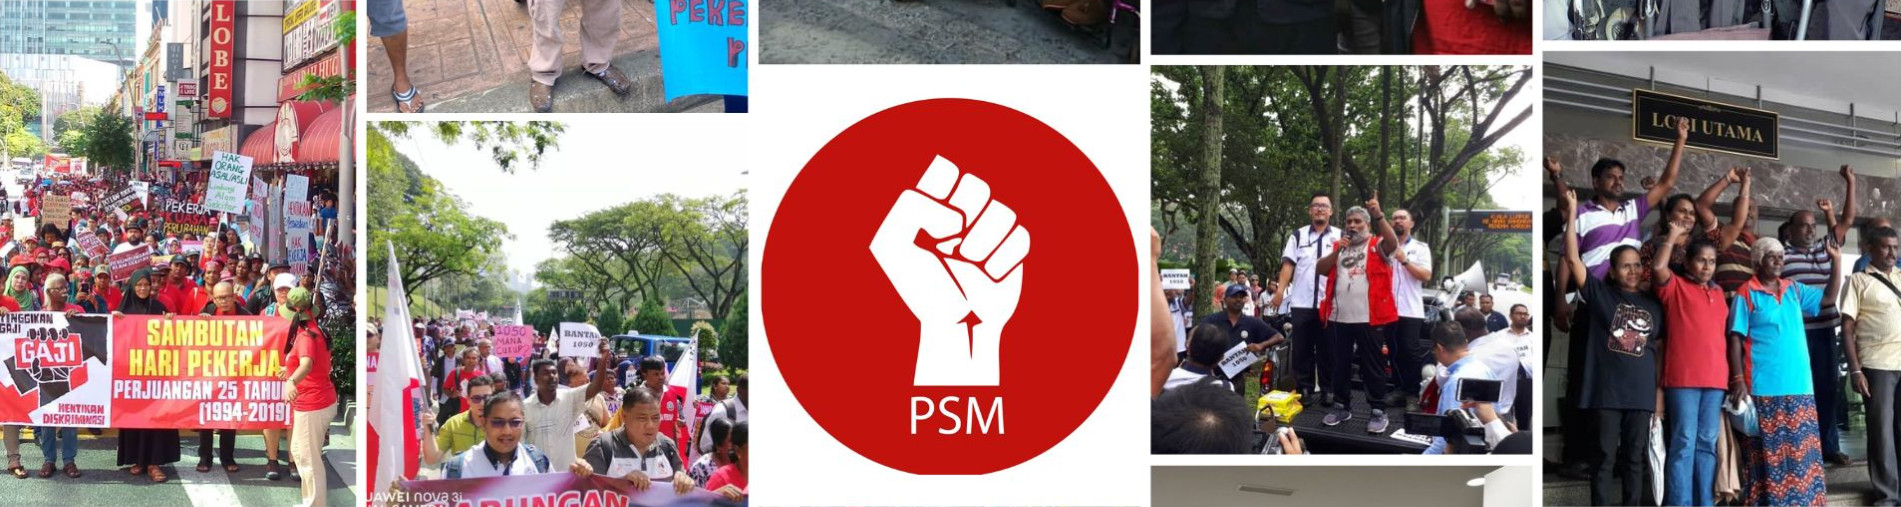 Make Klang Great Again: Support PSM Klang's community services! 